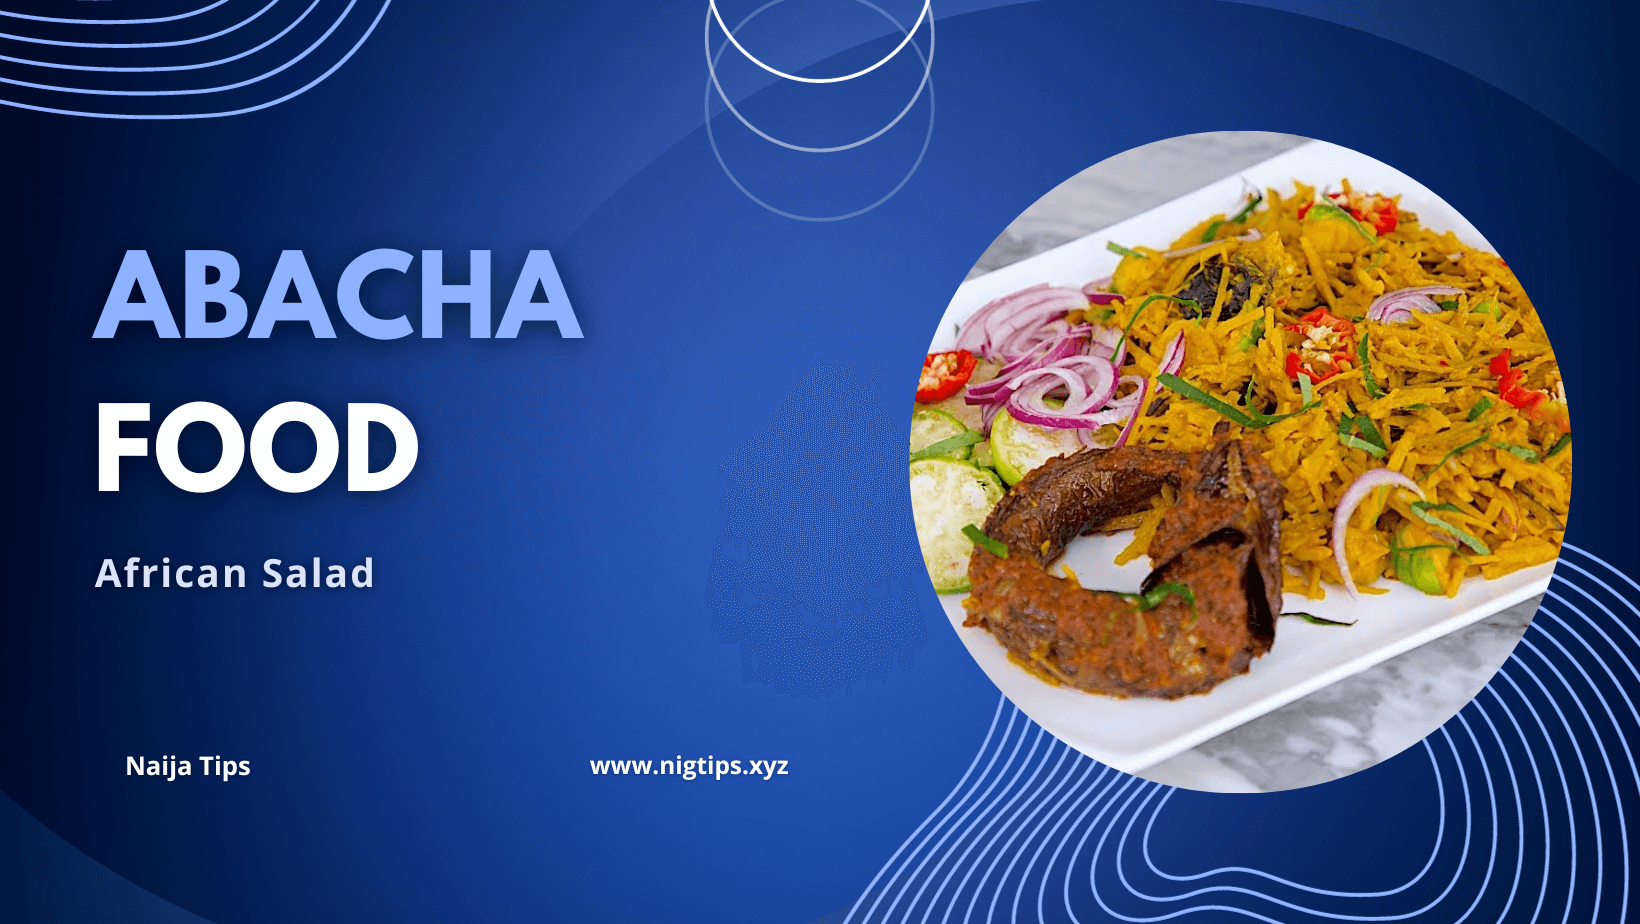 Abacha Food - African Salad